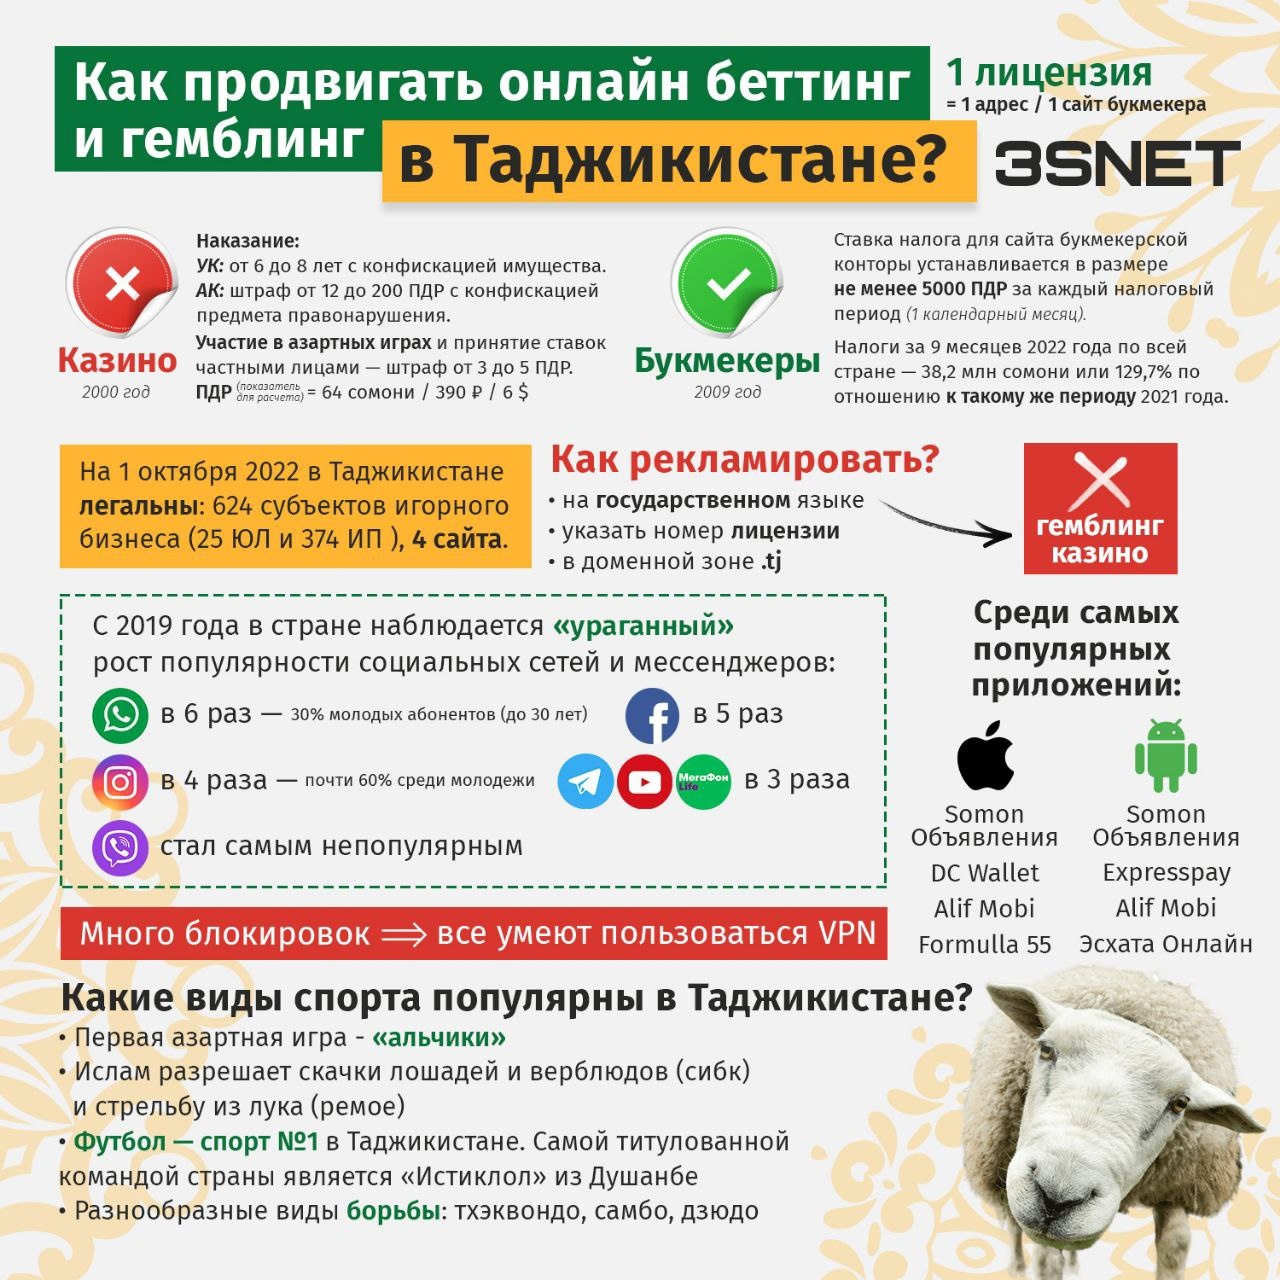 Tadjikistan info How to promote betting and gambling 3snet